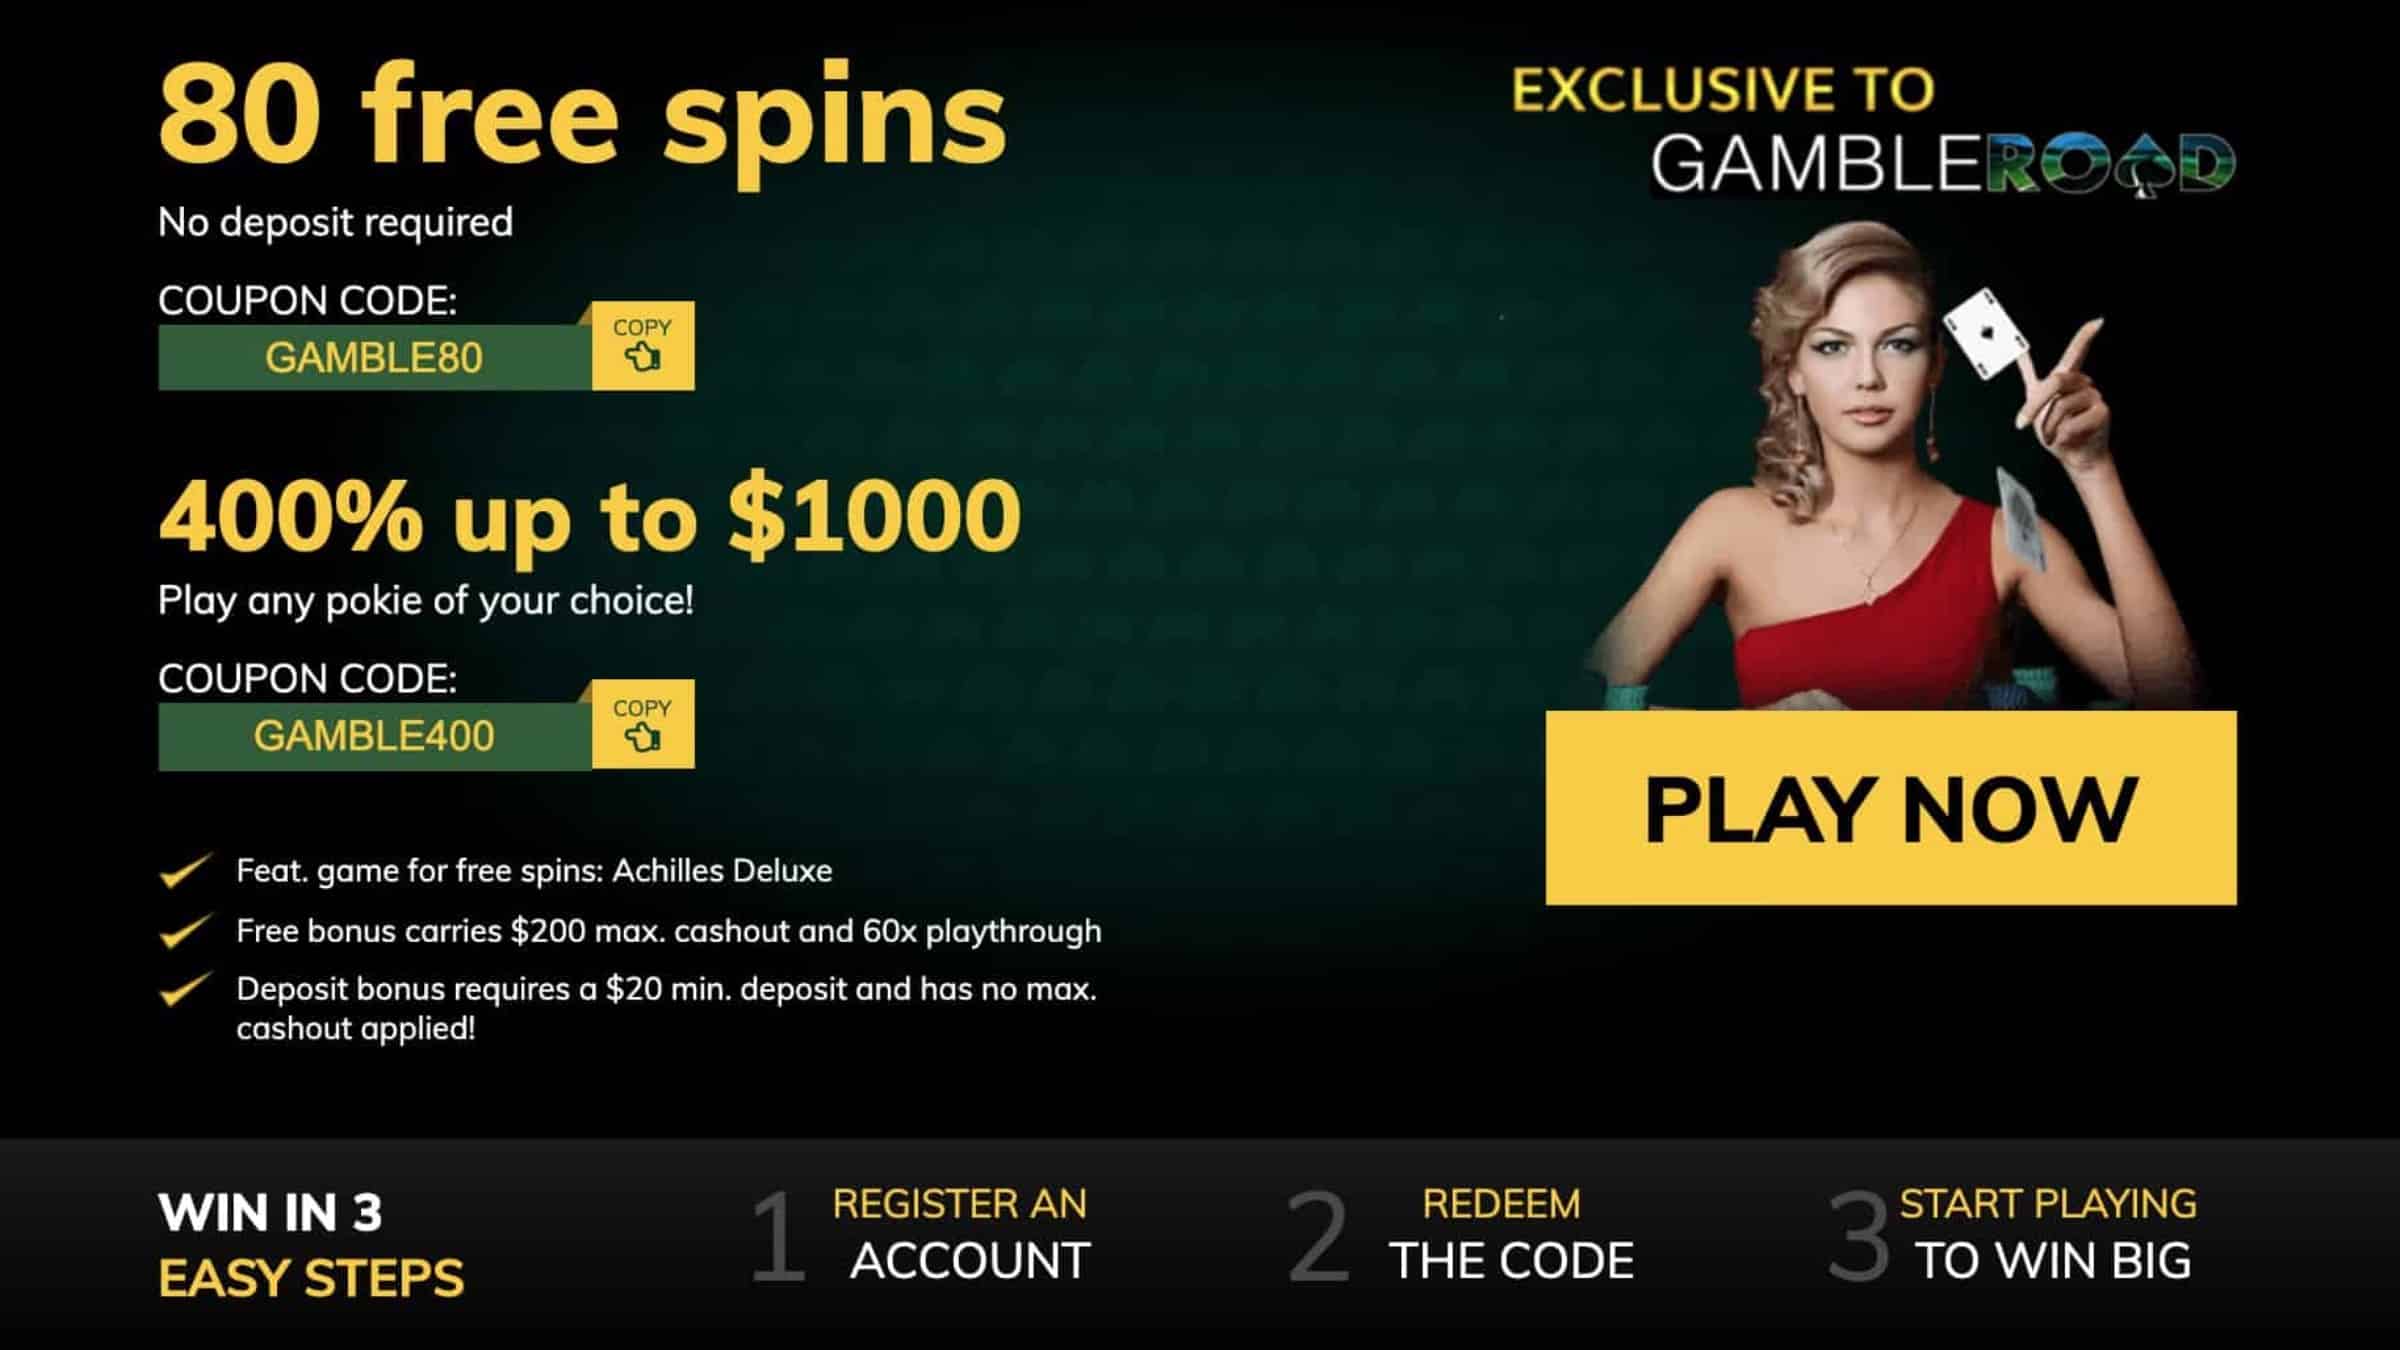 Royal ace casino bonus codes 2019